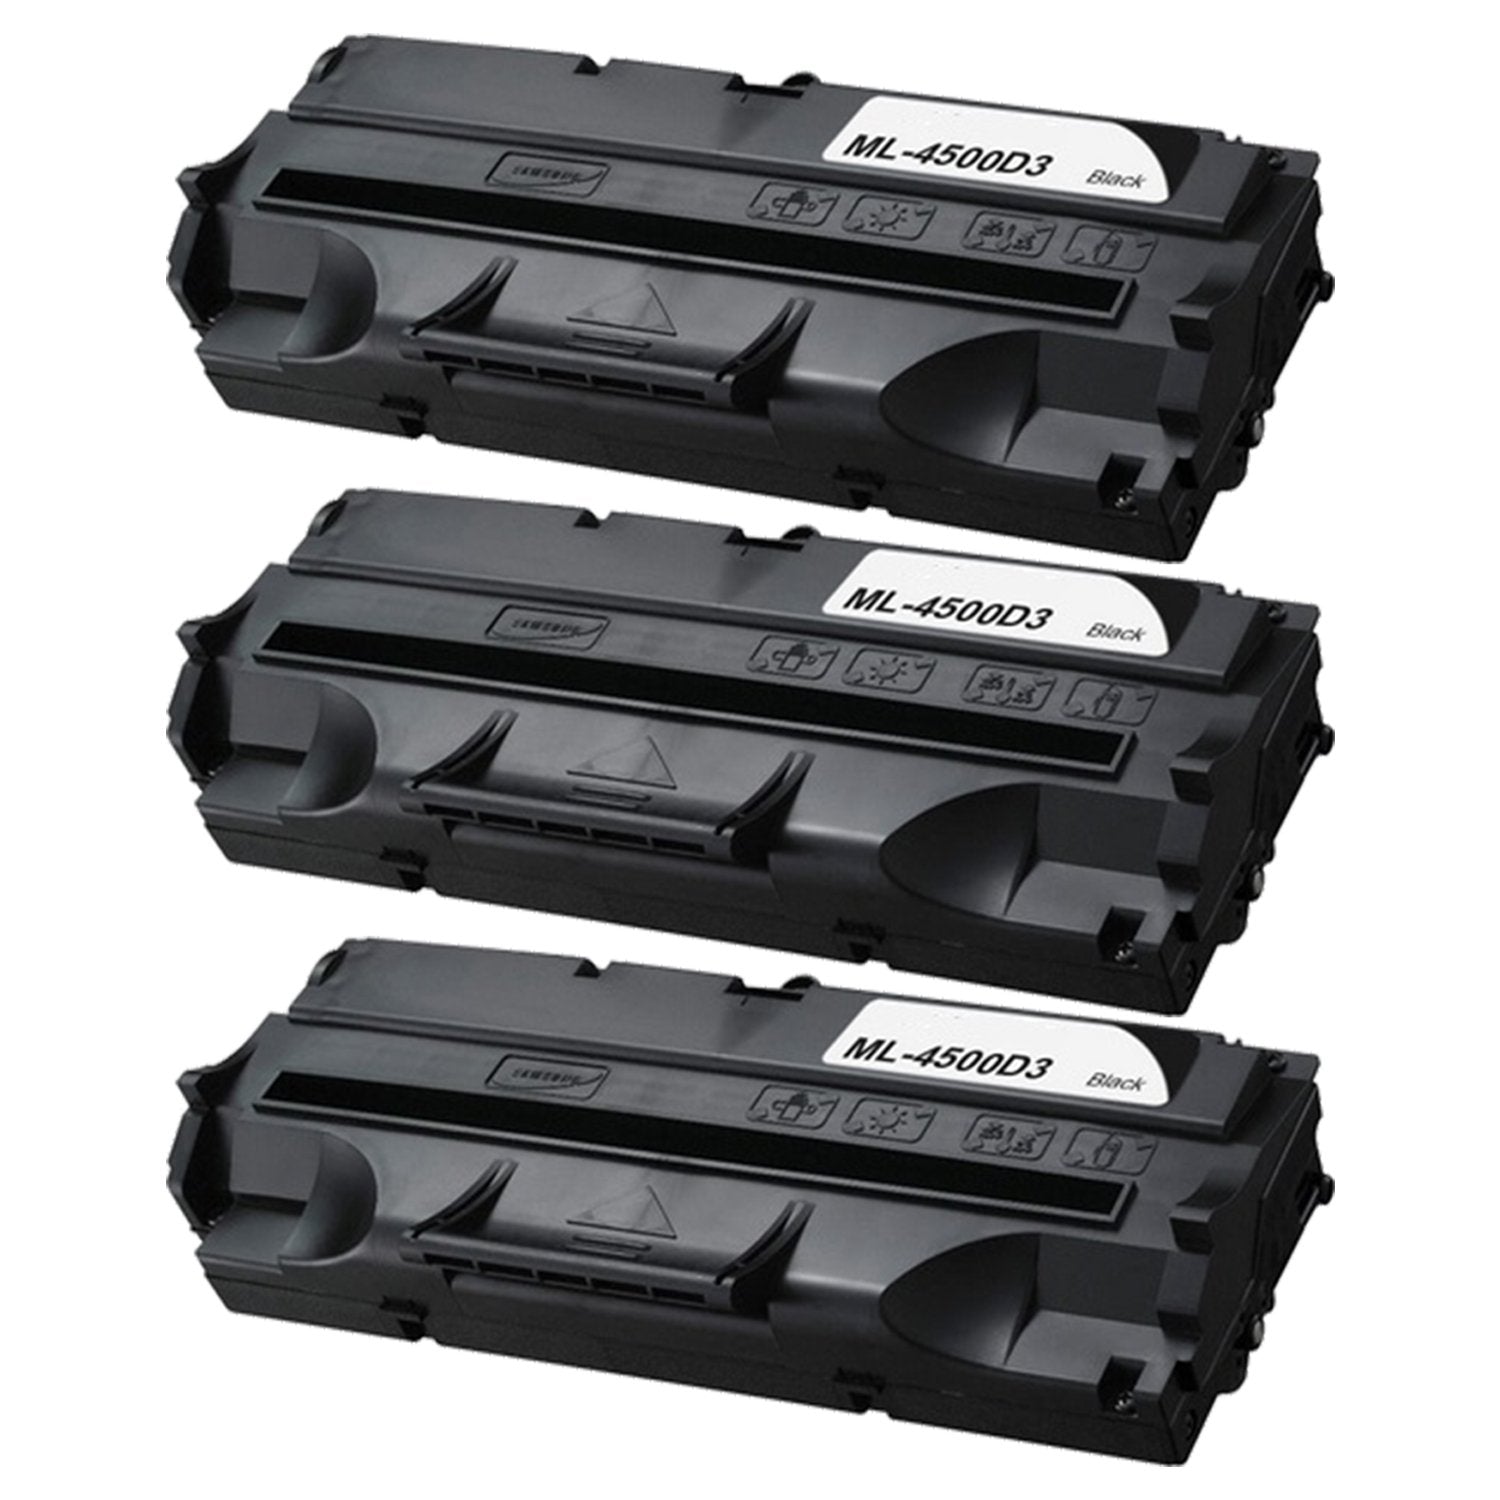 Absolute Toner Compatible Samsung ML-4500D3 Black Toner Cartridge | Absolute Toner Samsung Toner Cartridges